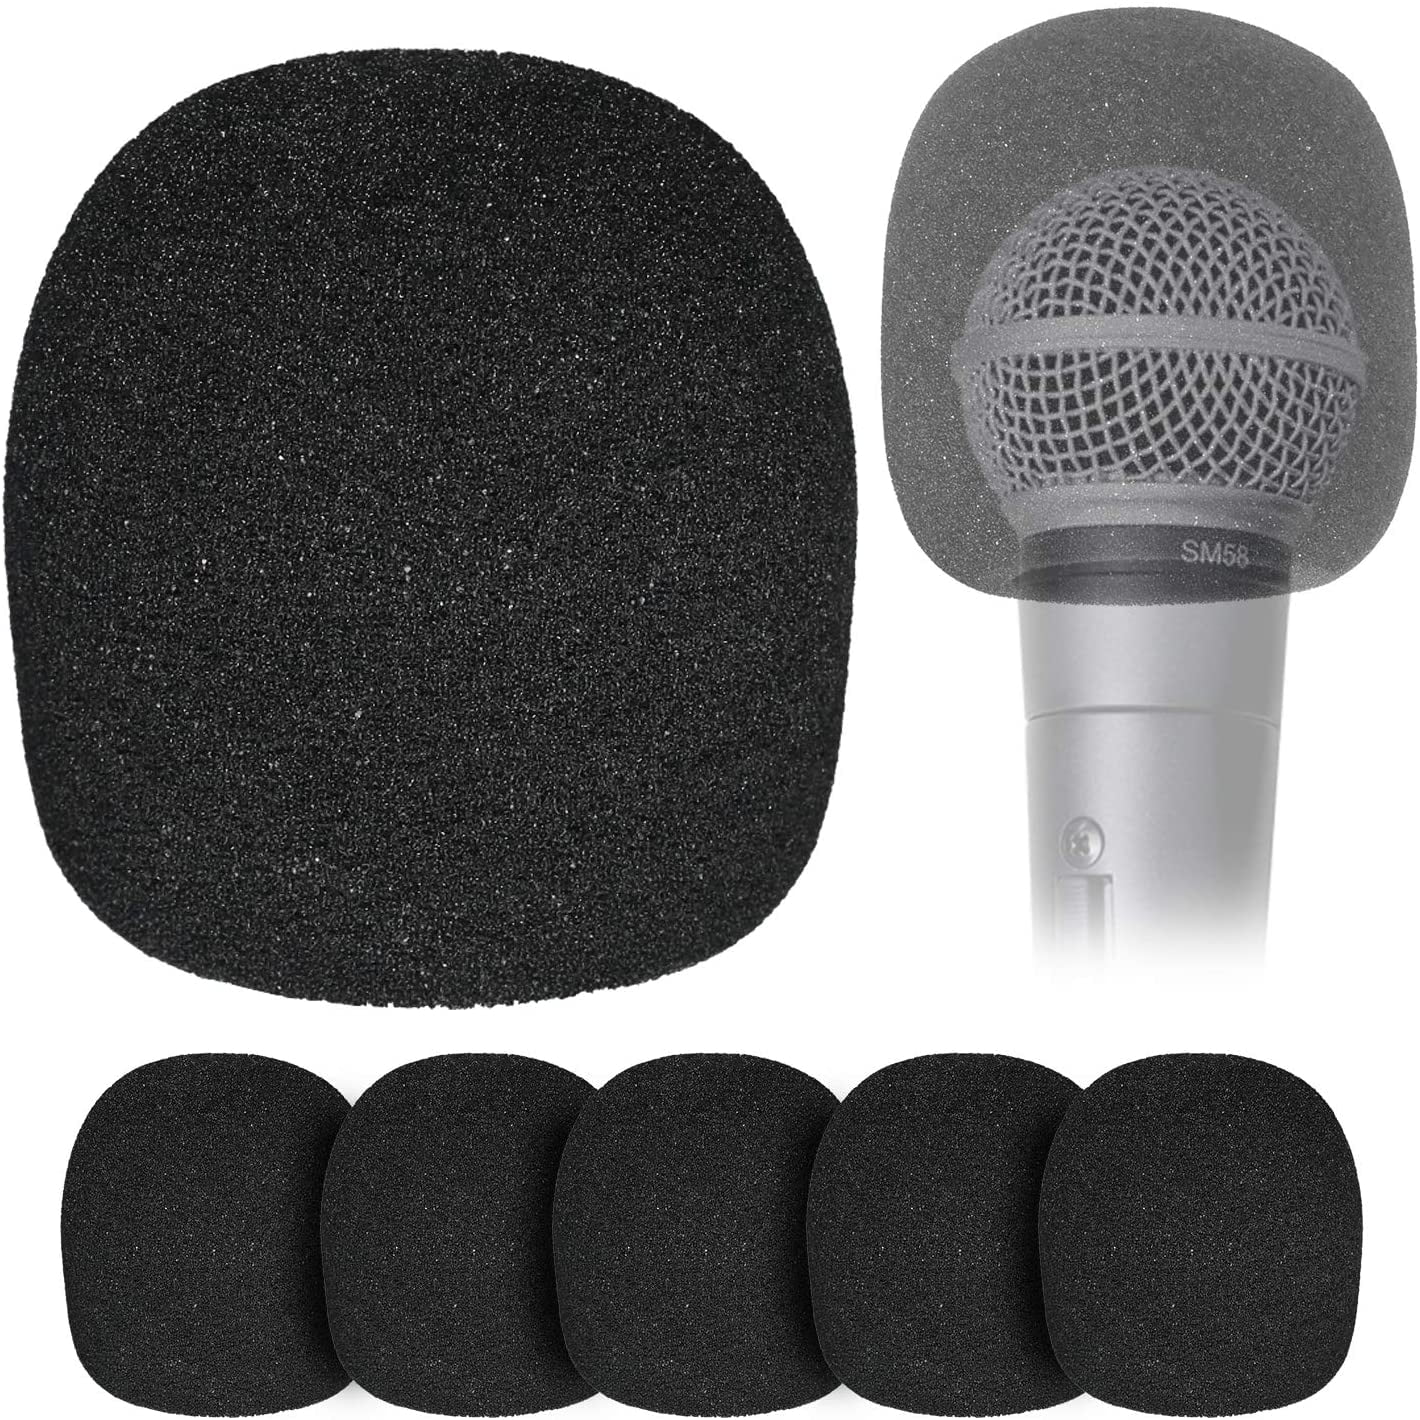 Moukey Microphone Mic Covers Foam Handheld Mic Windscreen Black Pack of 6 